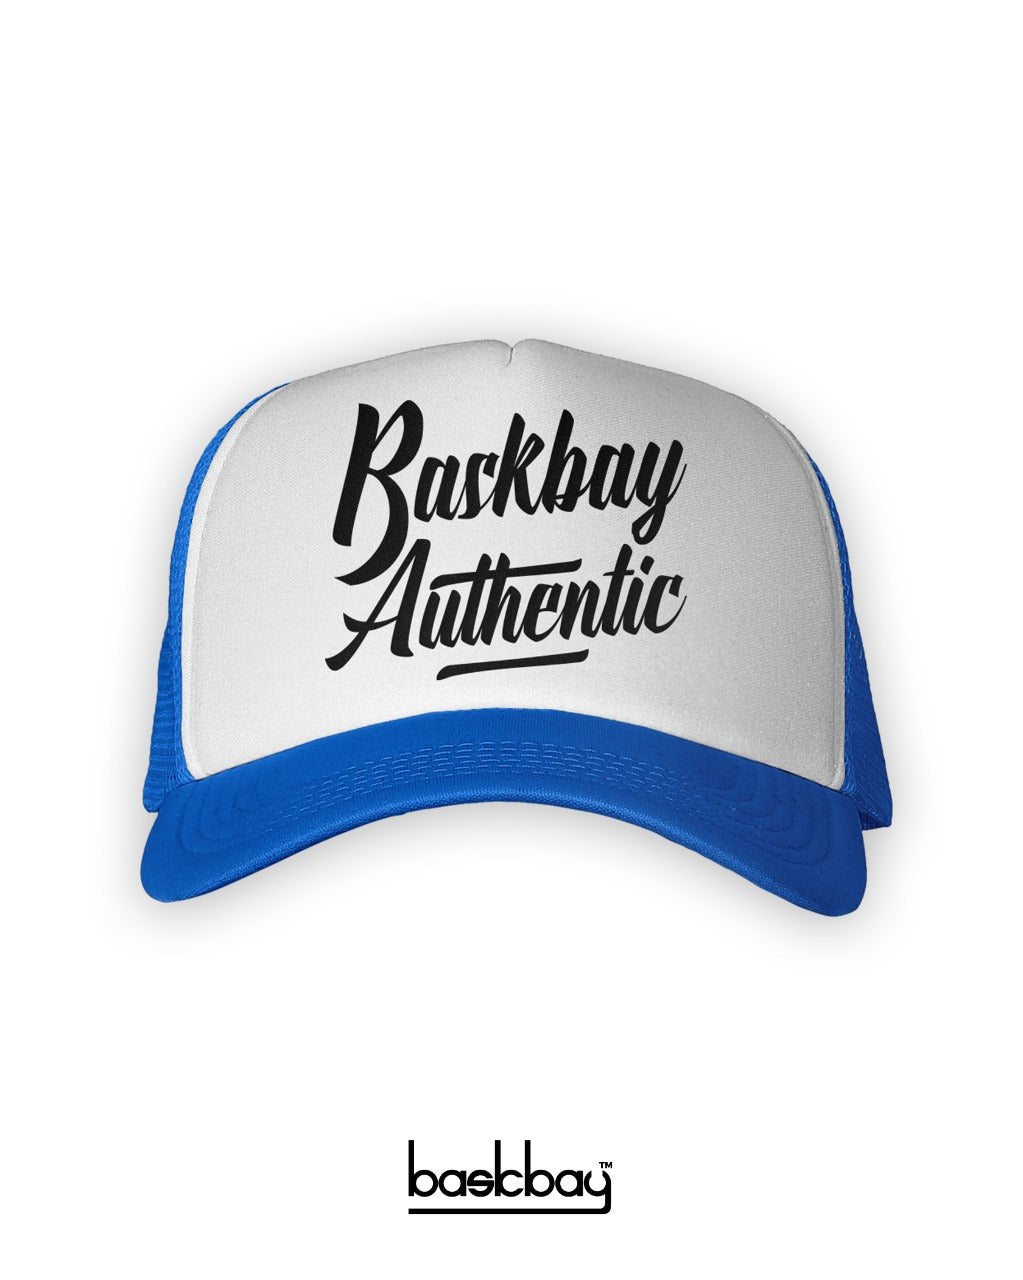 Baskbay Authentic Trucker Cap